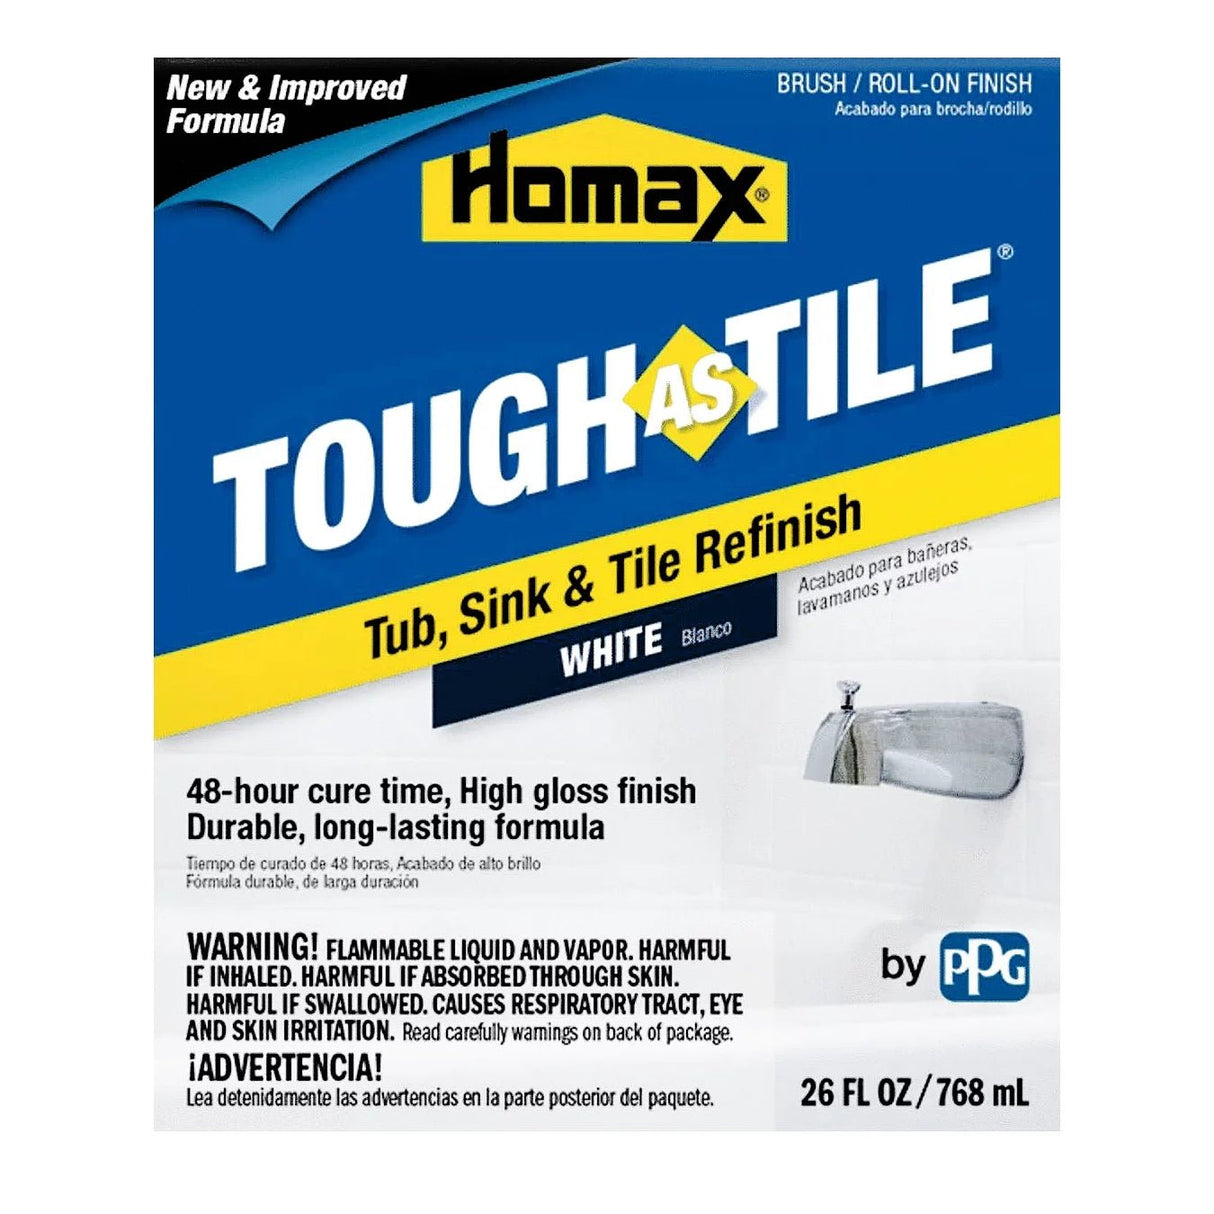 Homax Tough As Tile White Tub Sink & Tile Roll-On Application